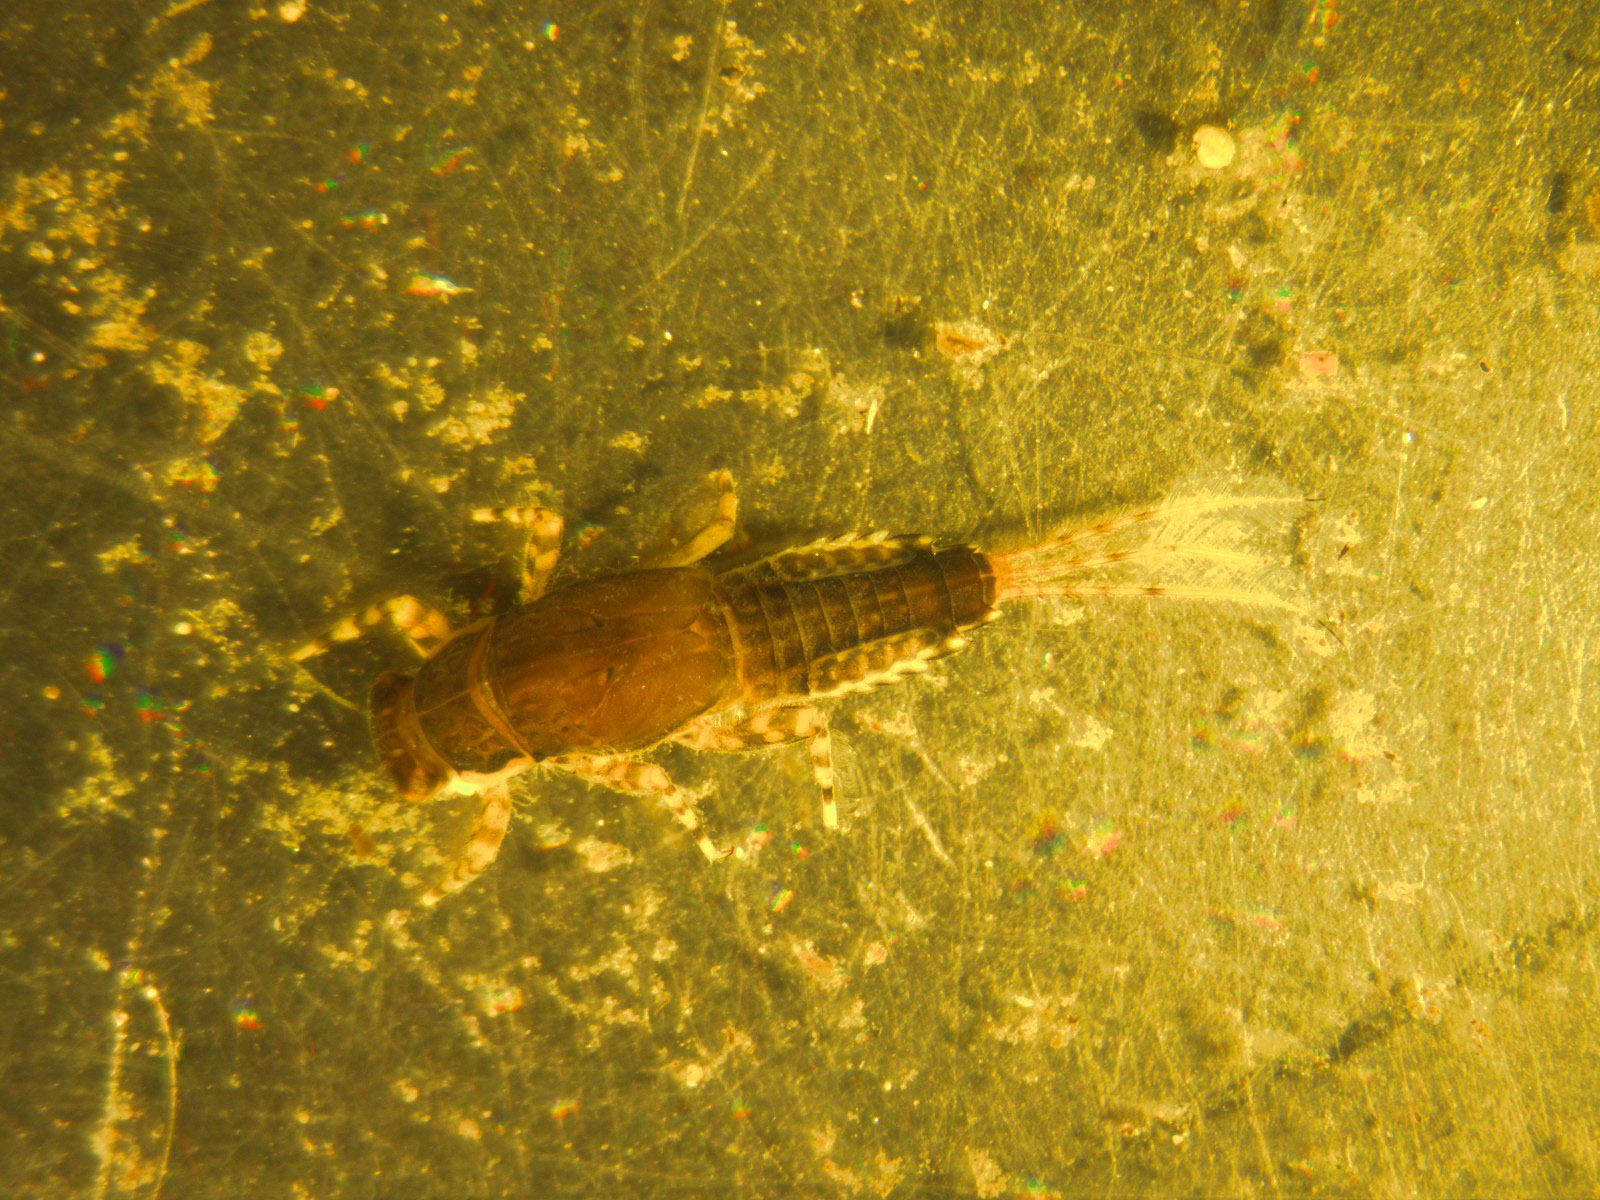 Ephemerella (Hendricksons, Sulphurs, PMDs) Mayfly Nymph from Rock Creek in Montana